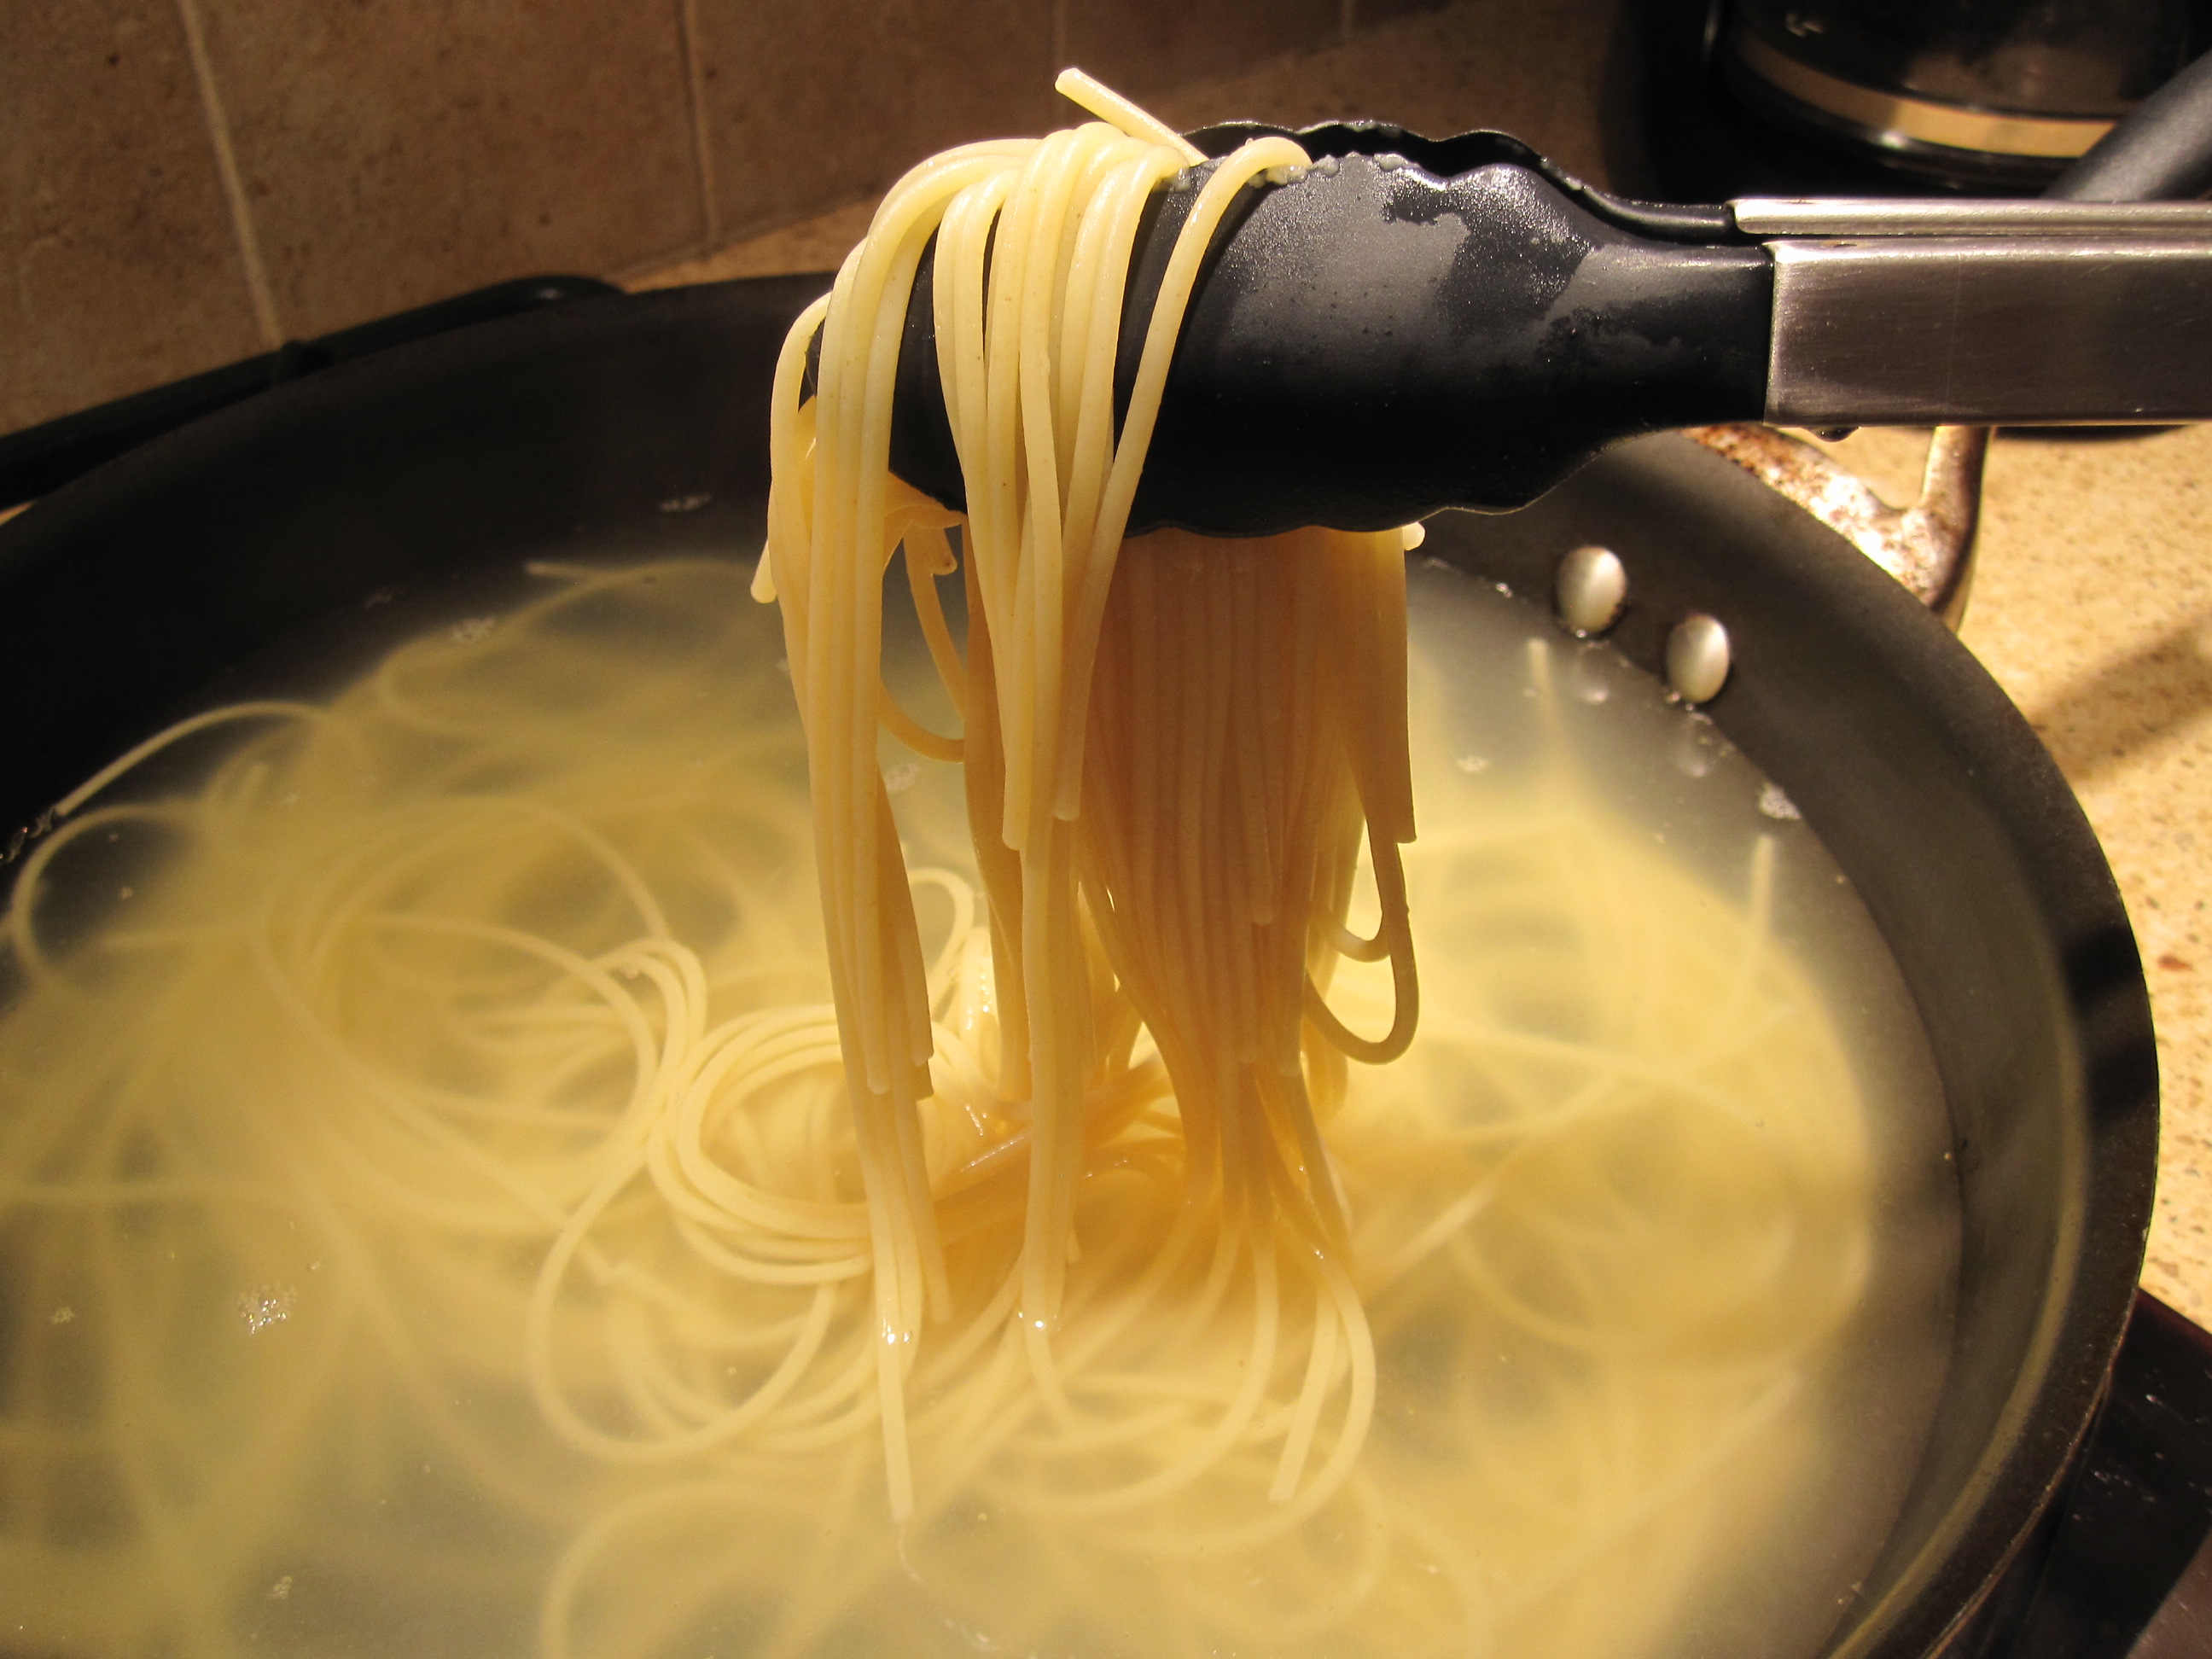 https://thesouthinmymouth.files.wordpress.com/2012/02/cooking-pasta-2.jpg